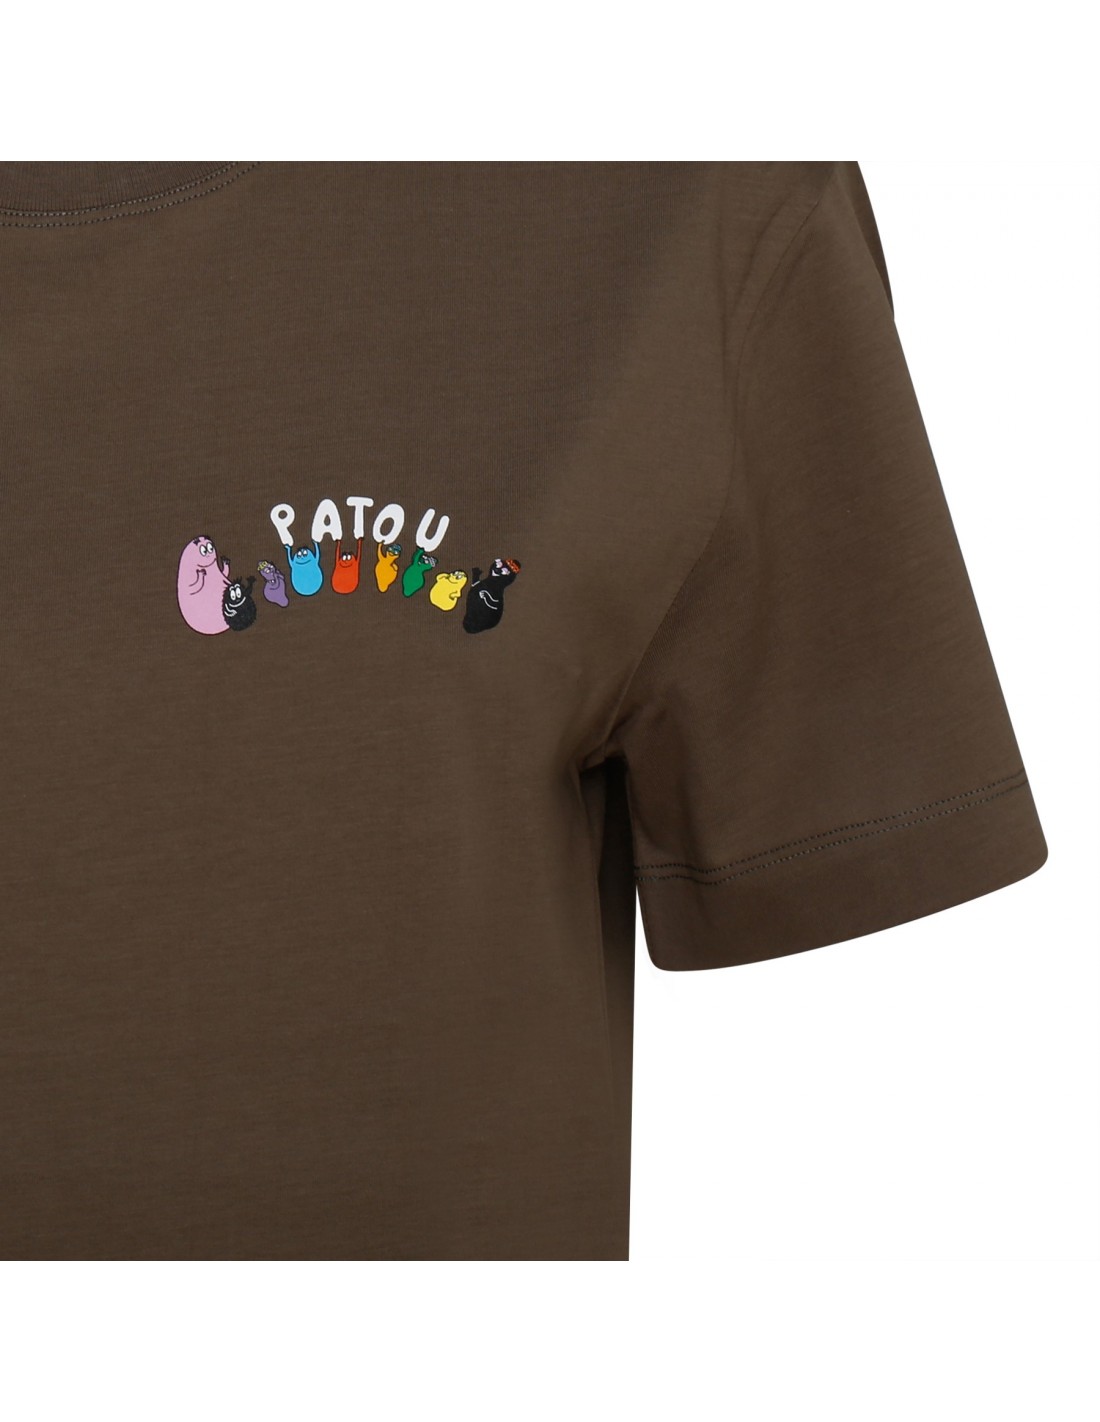 Barbapatou bronze-hue organic cotton T-shirt